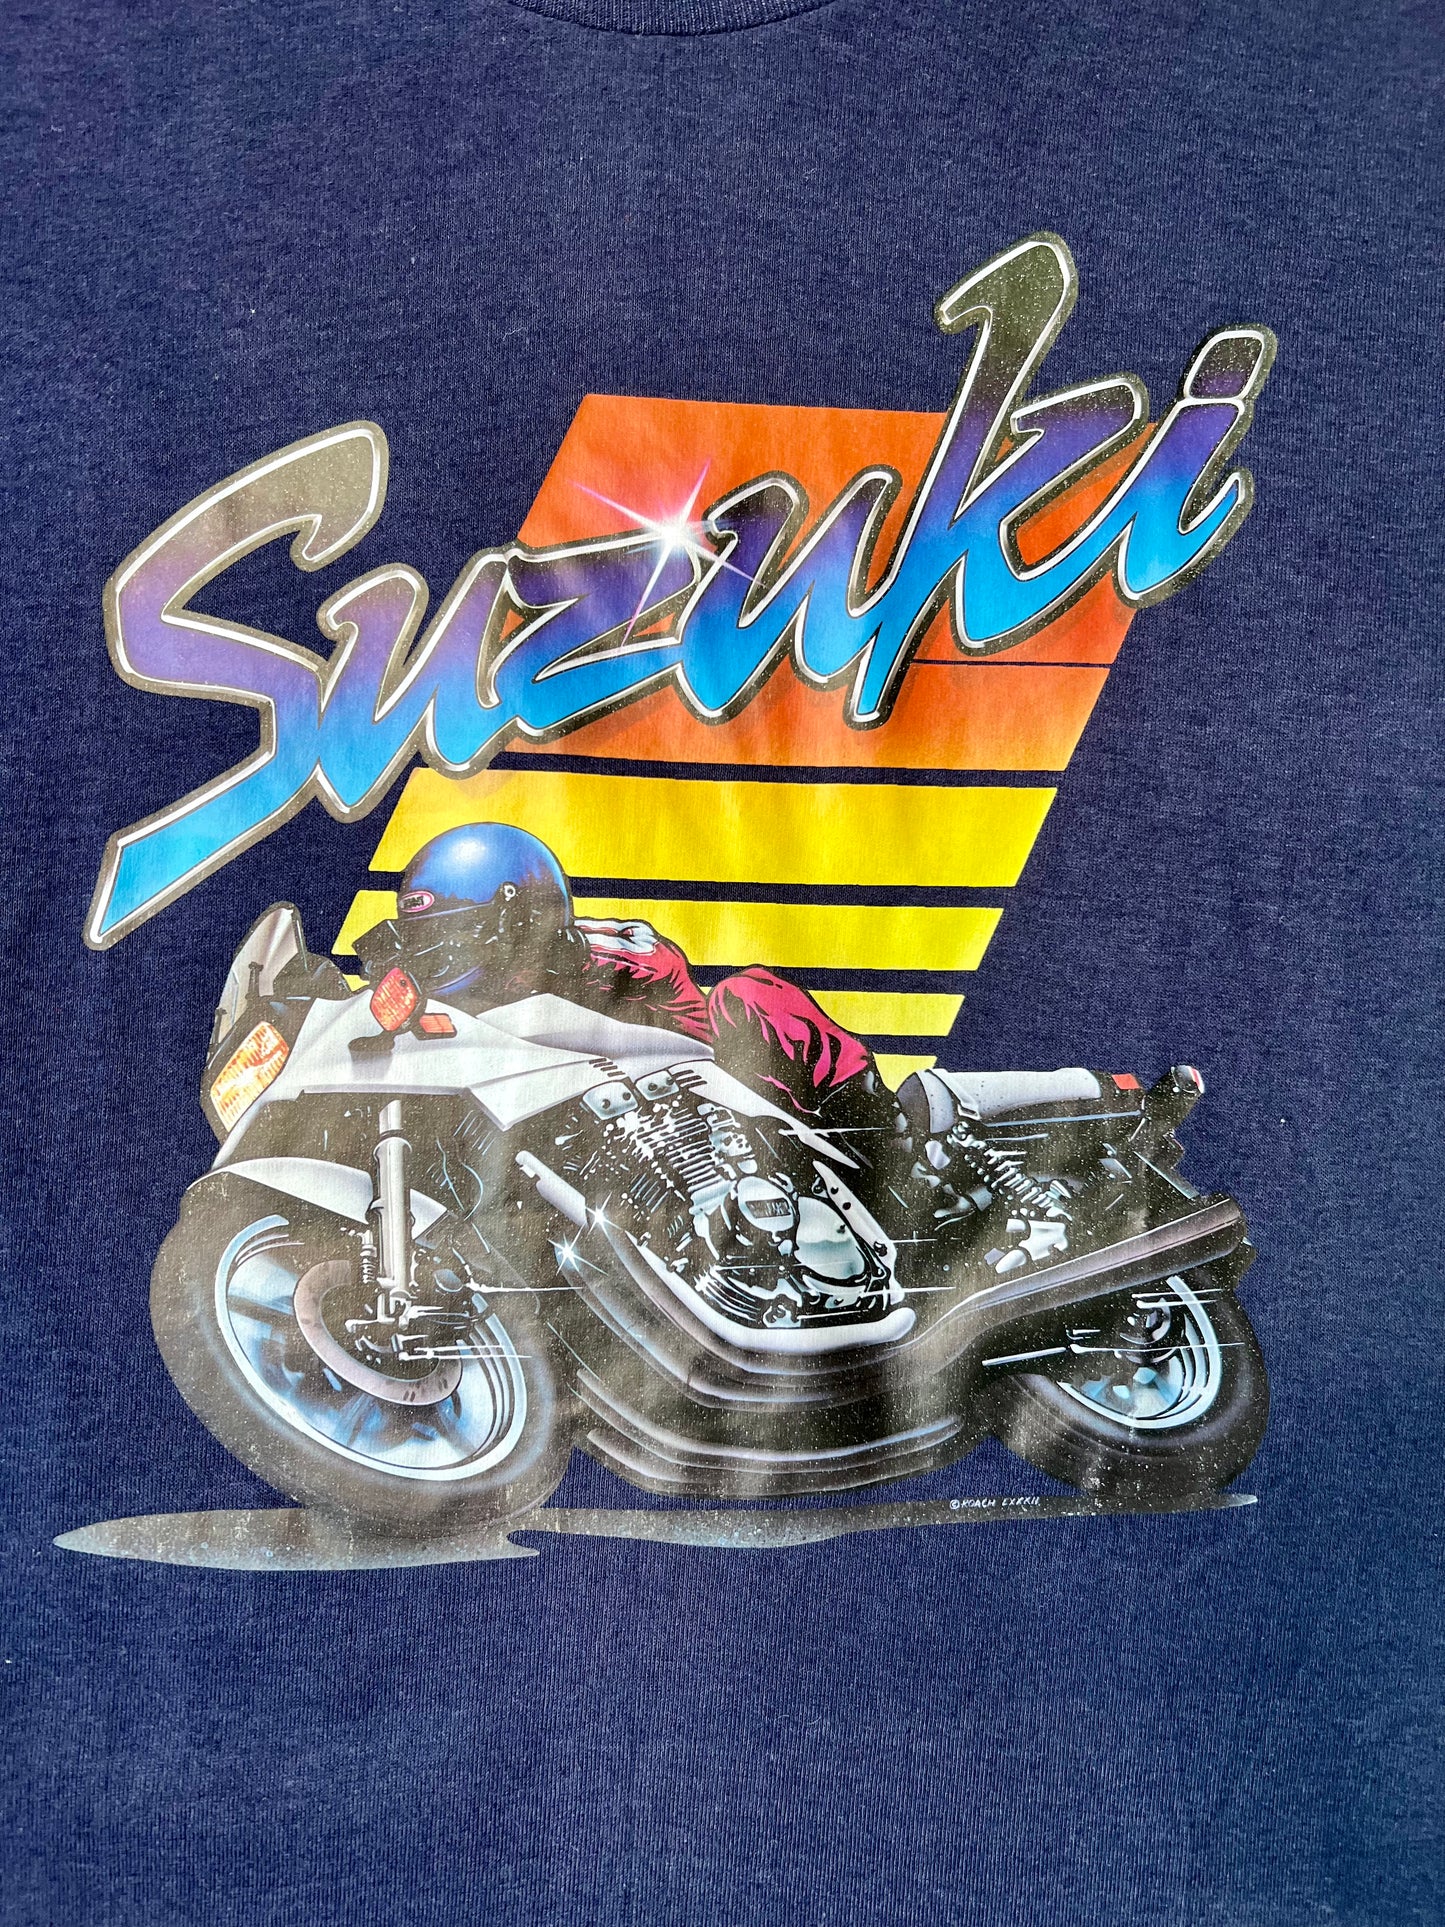 1982 Roach Suzuki Tee